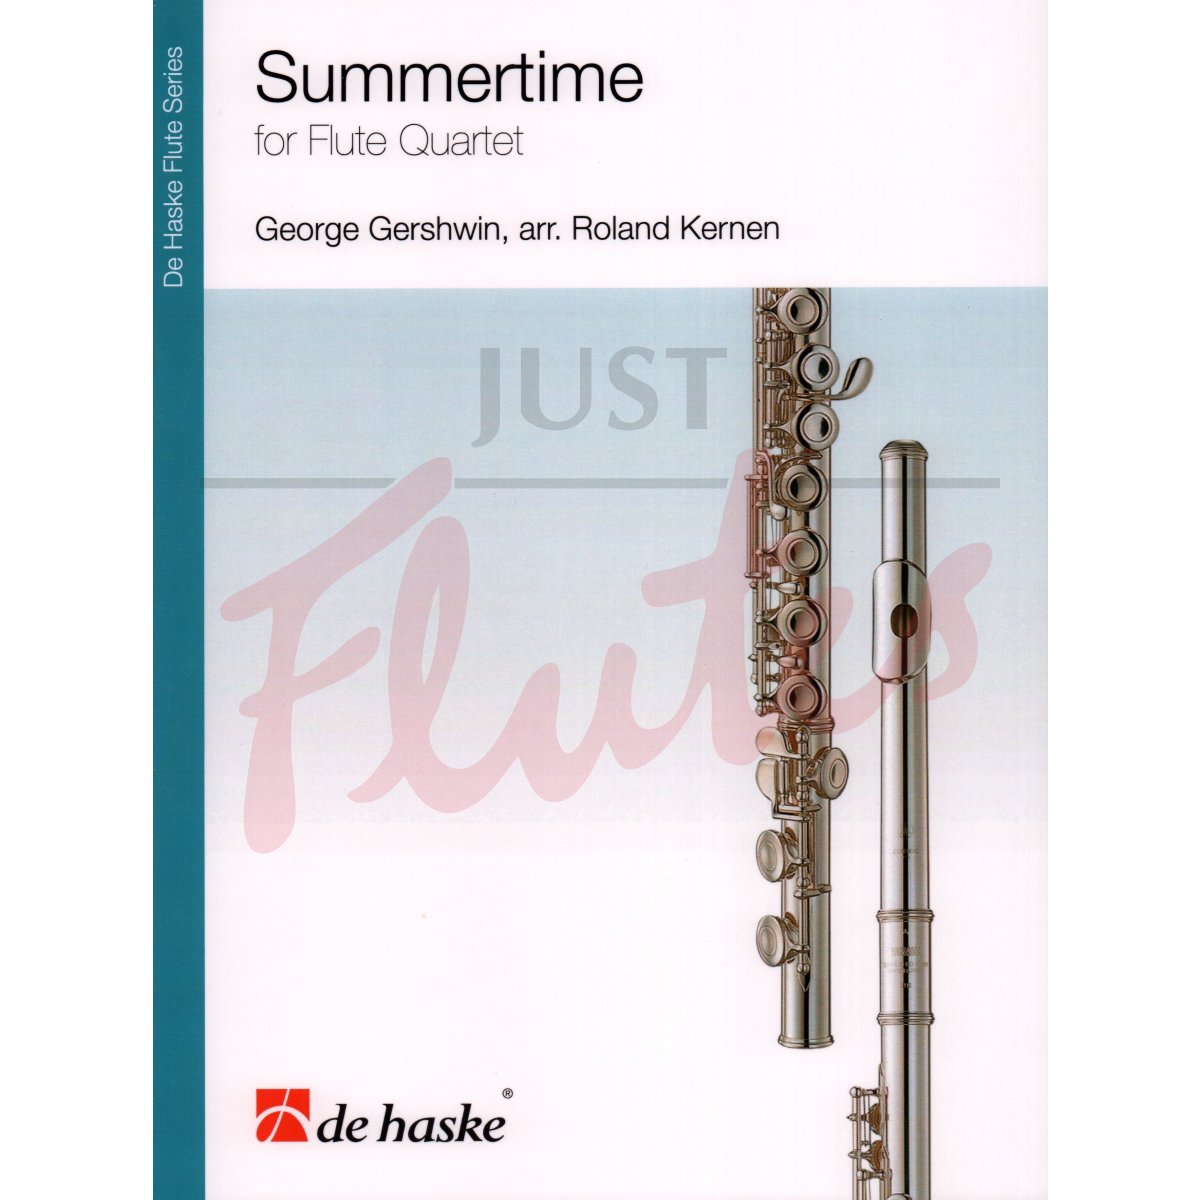 Summertime for Four Flutes